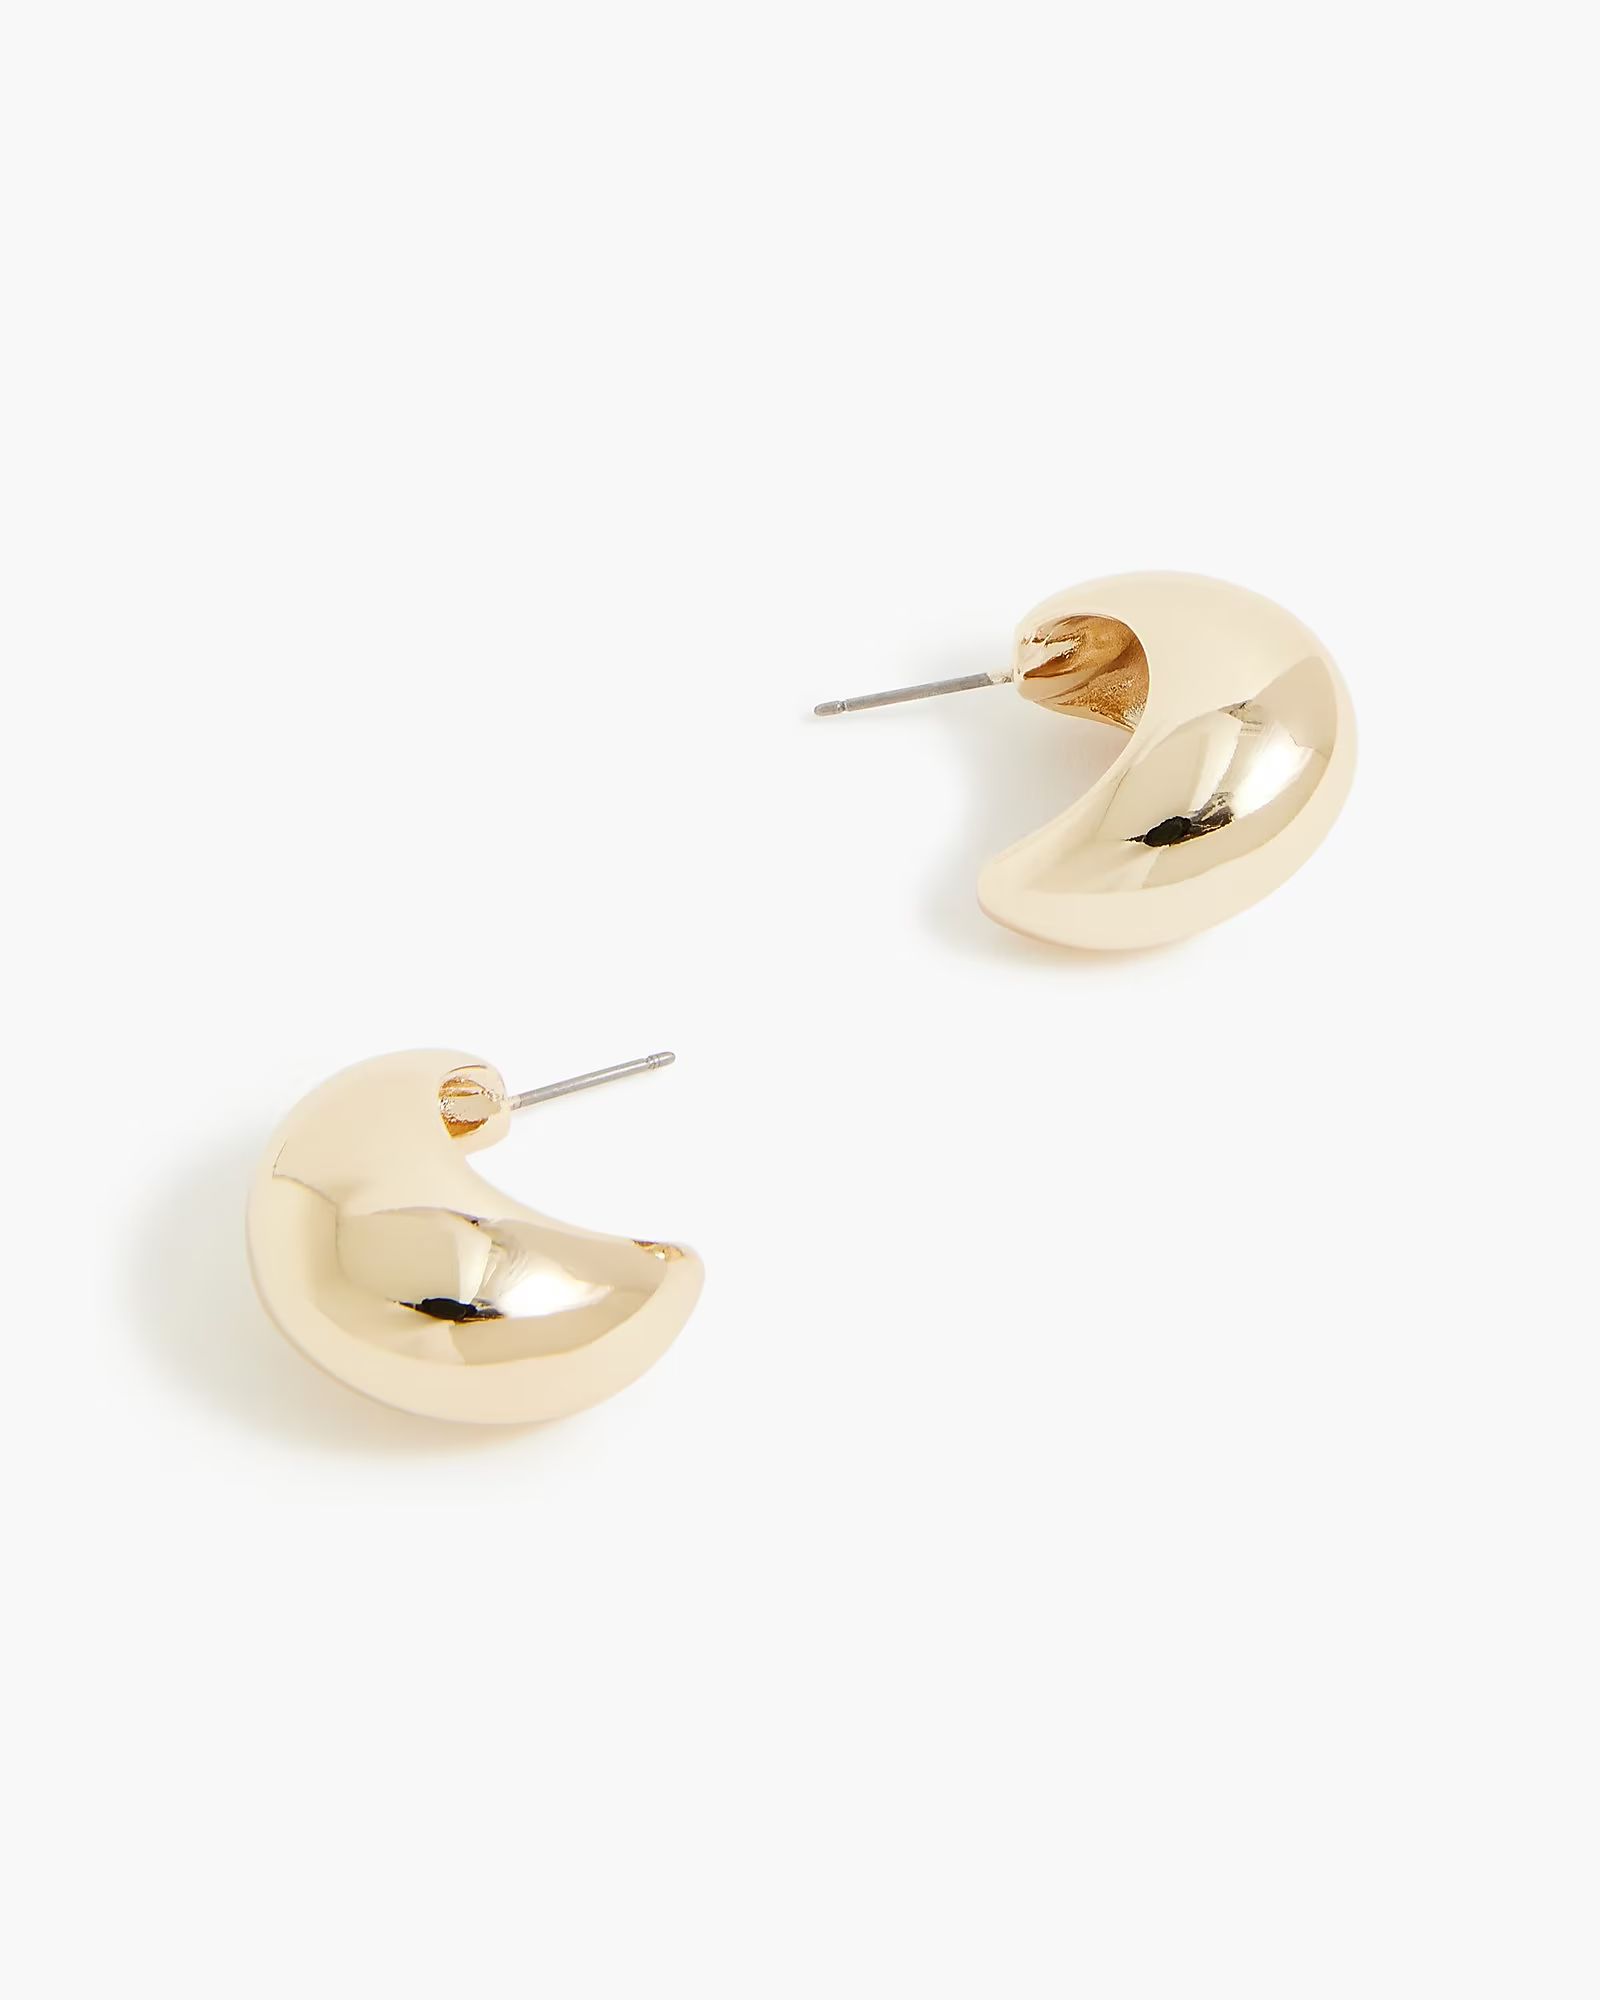 Orb earrings | J.Crew Factory